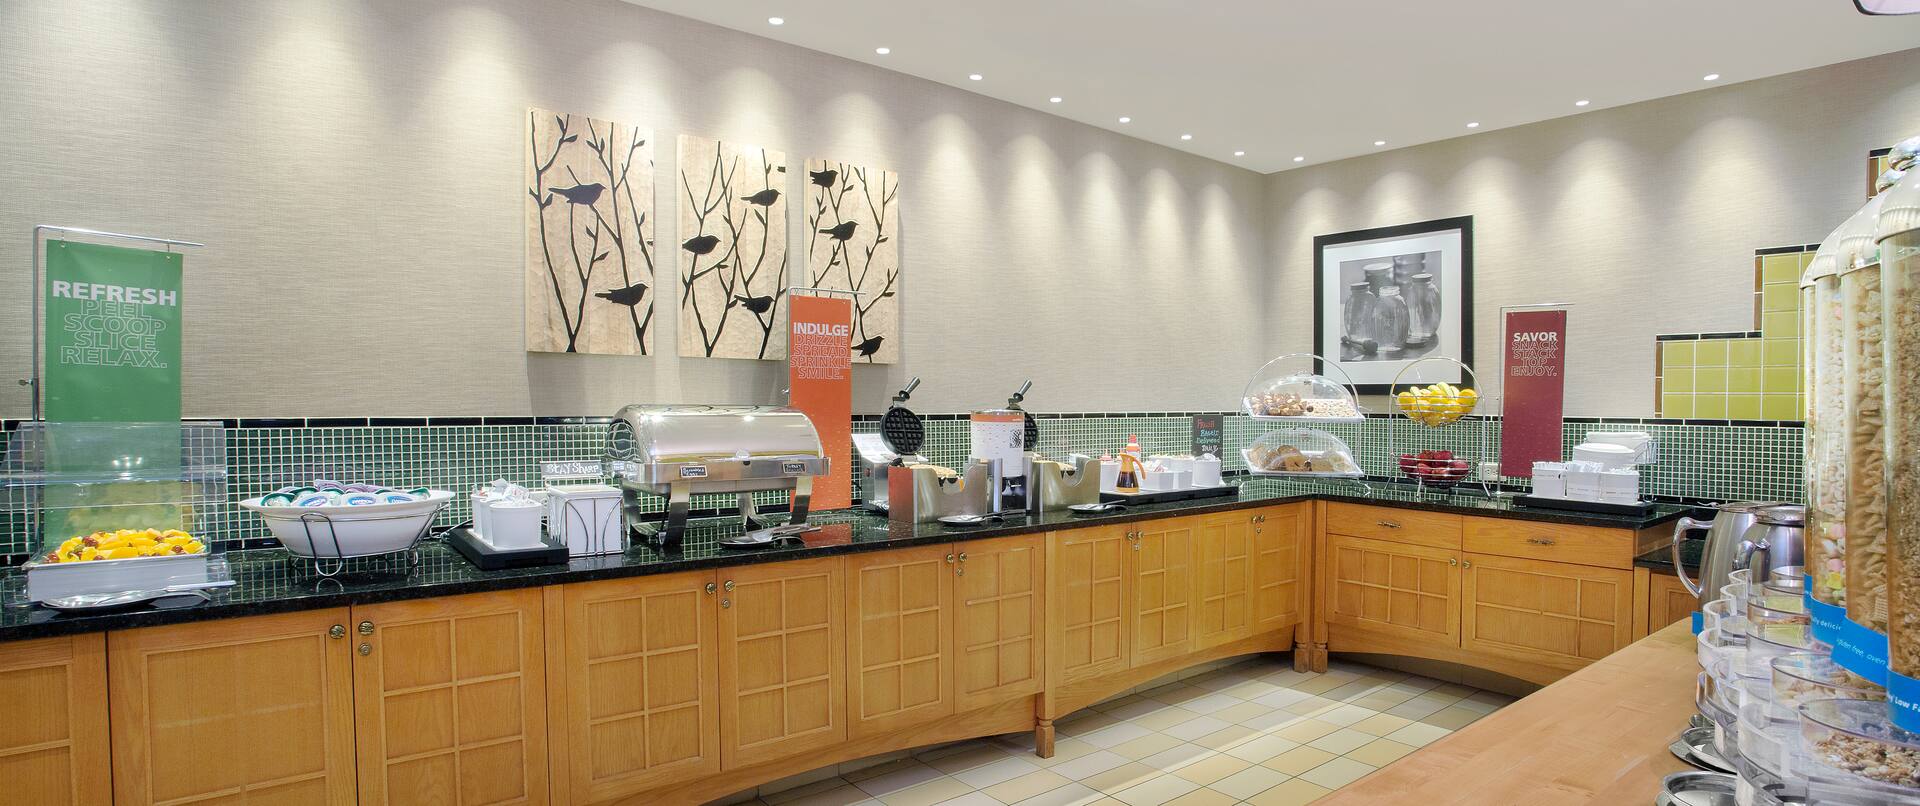 Hampton Inn Middletown Hotel, NY - Breakfast Buffet Serving Area